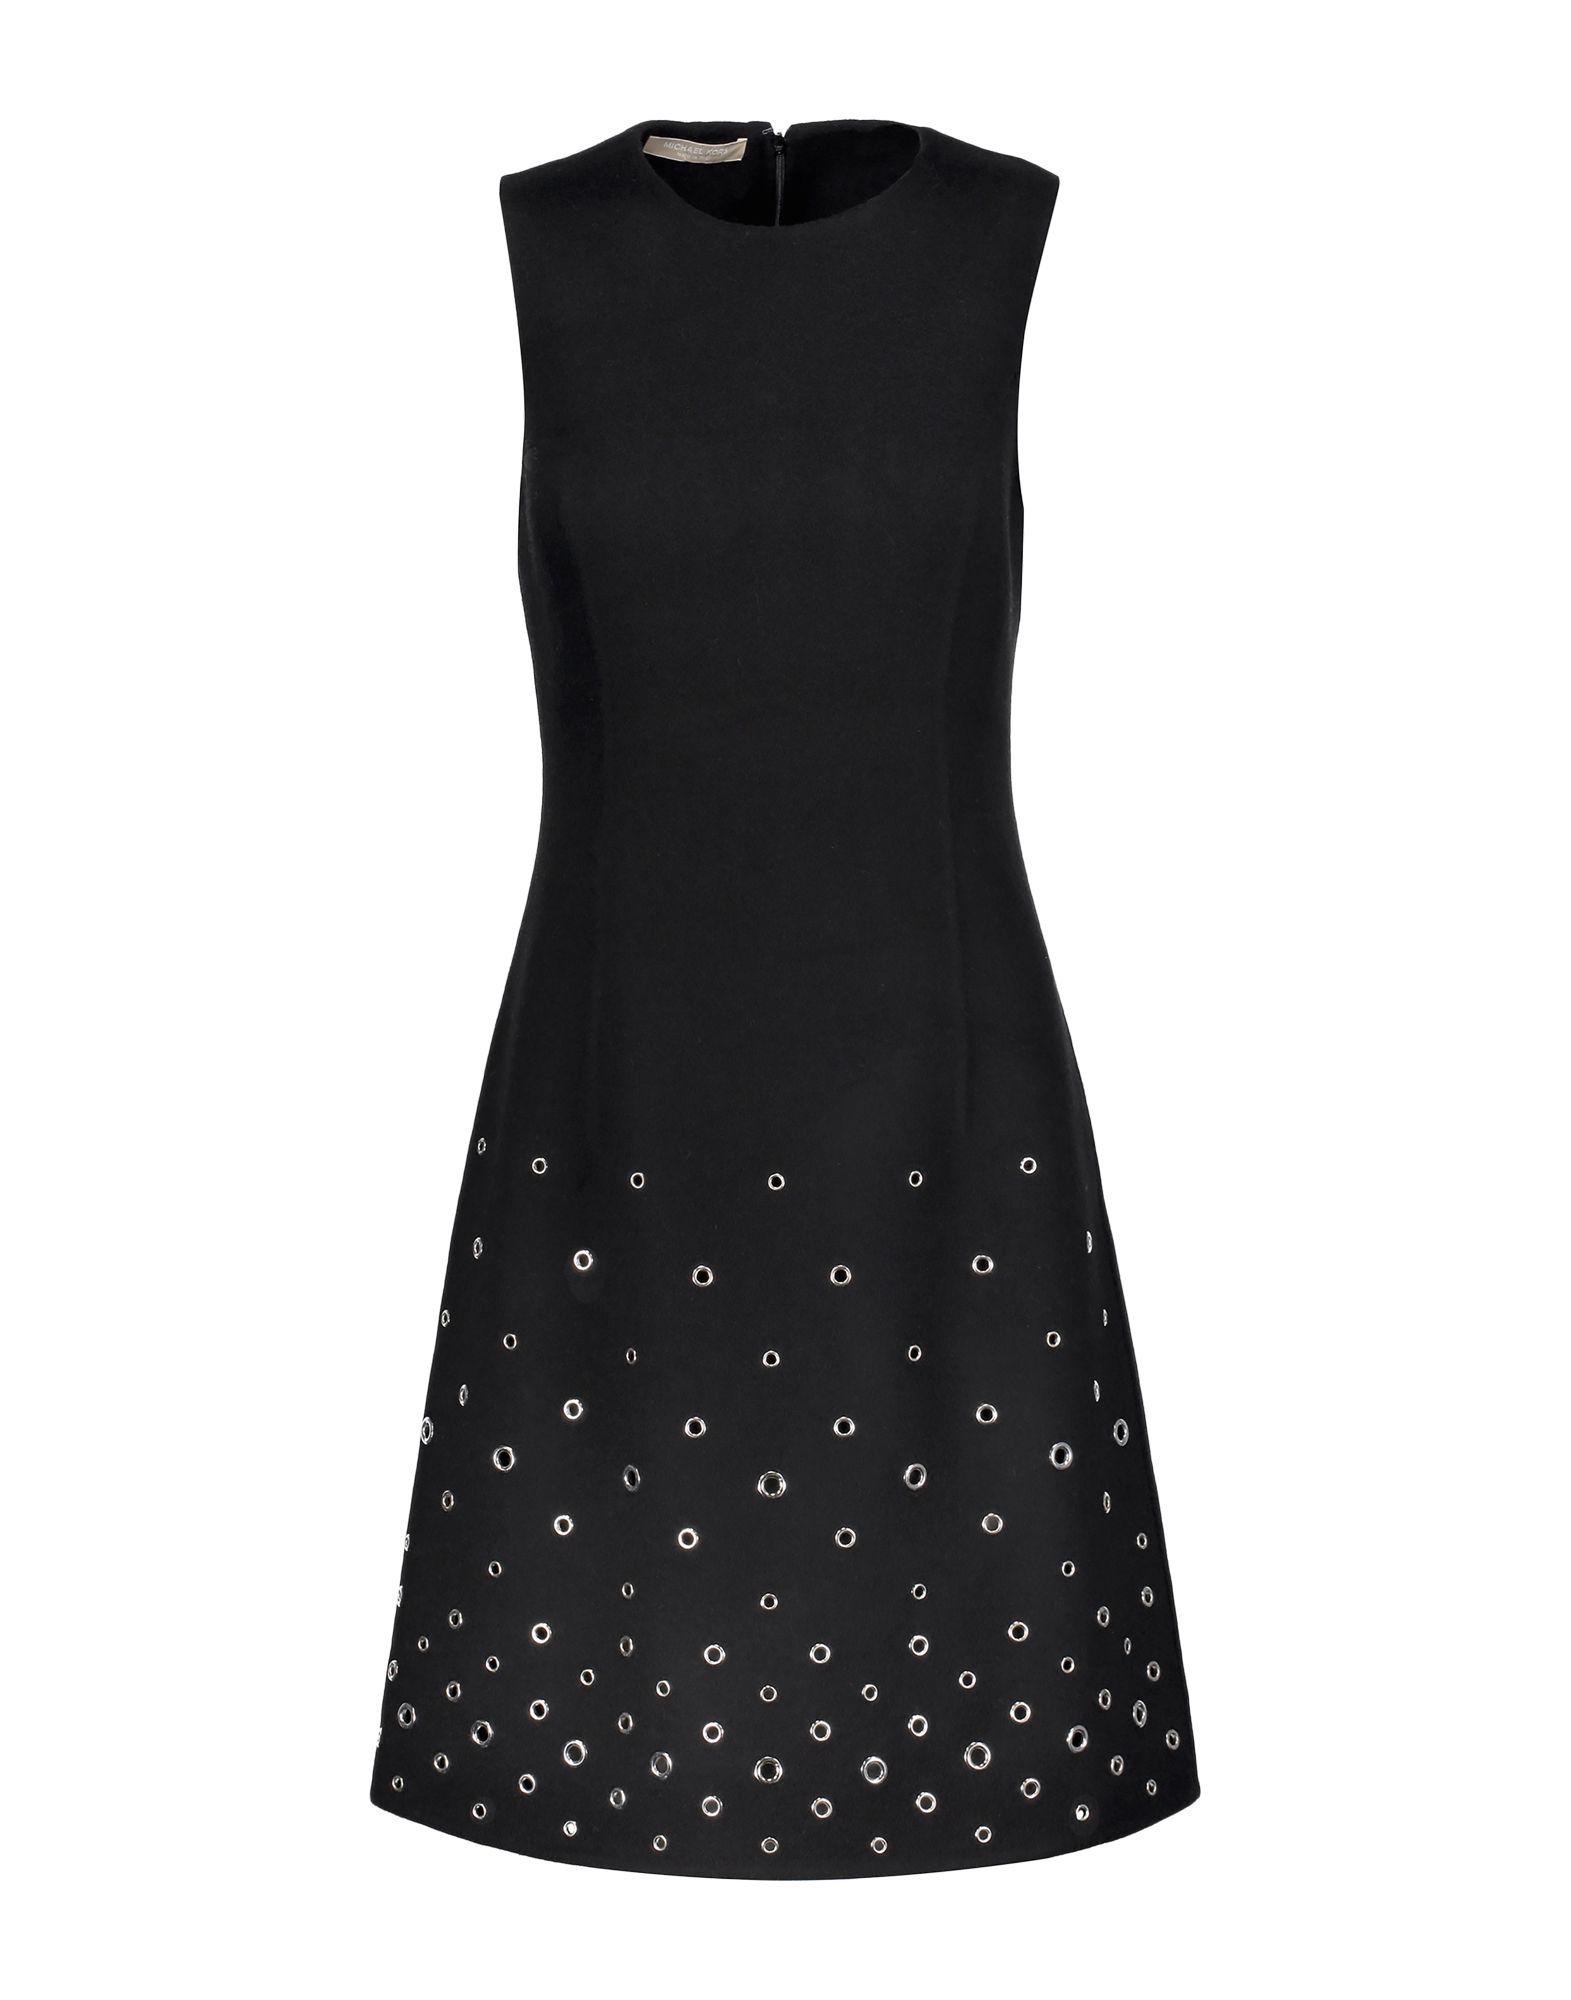 MICHAEL Michael Kors Short Dress in Black - Lyst